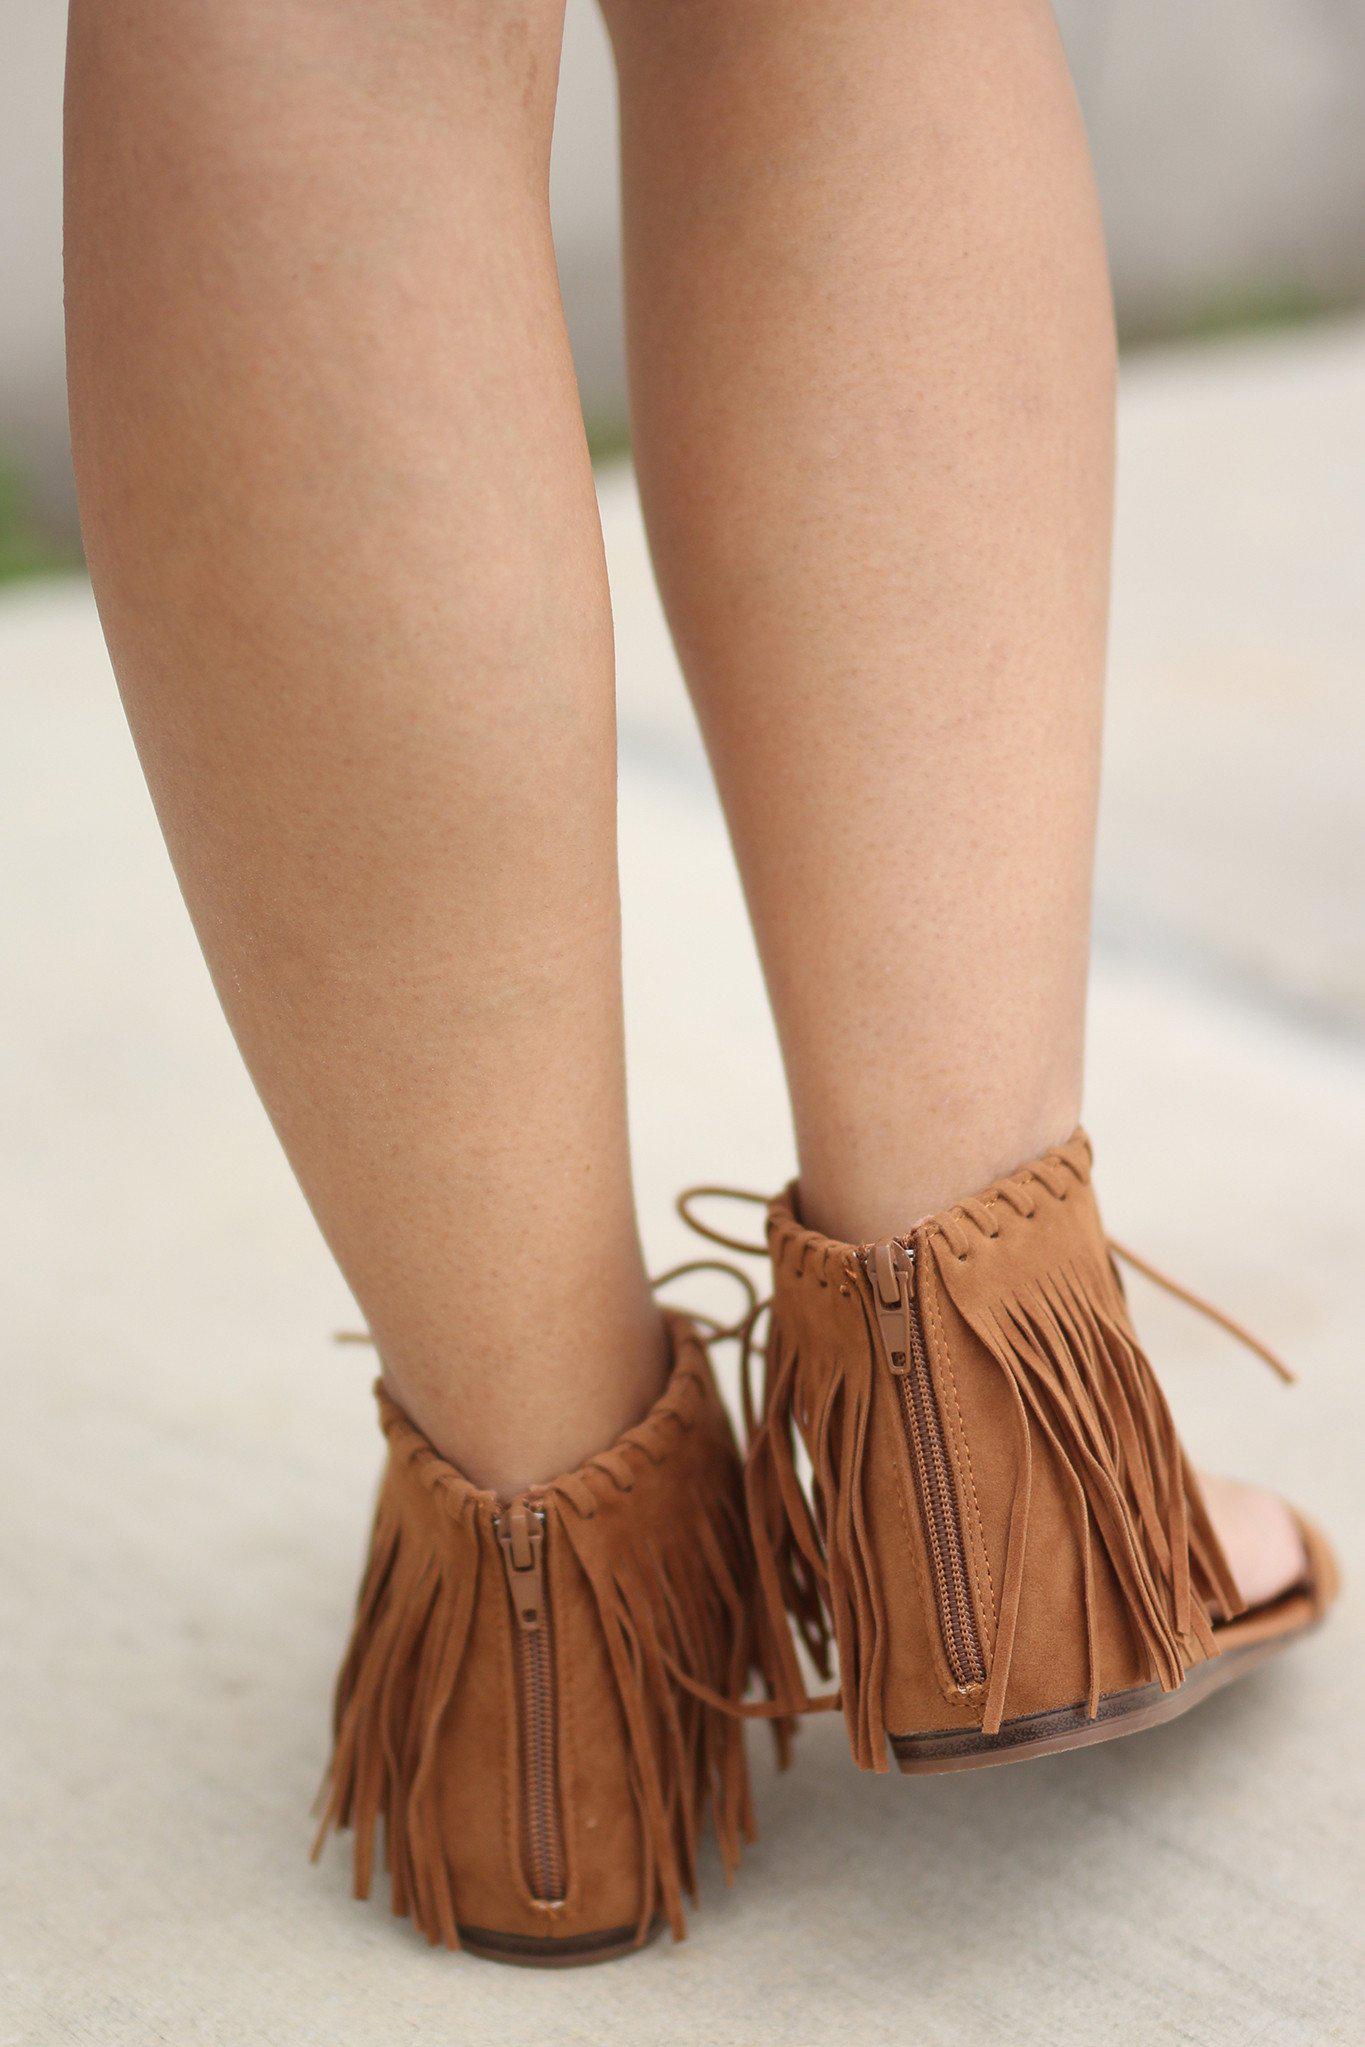 Tan Fringe Flat Sandals